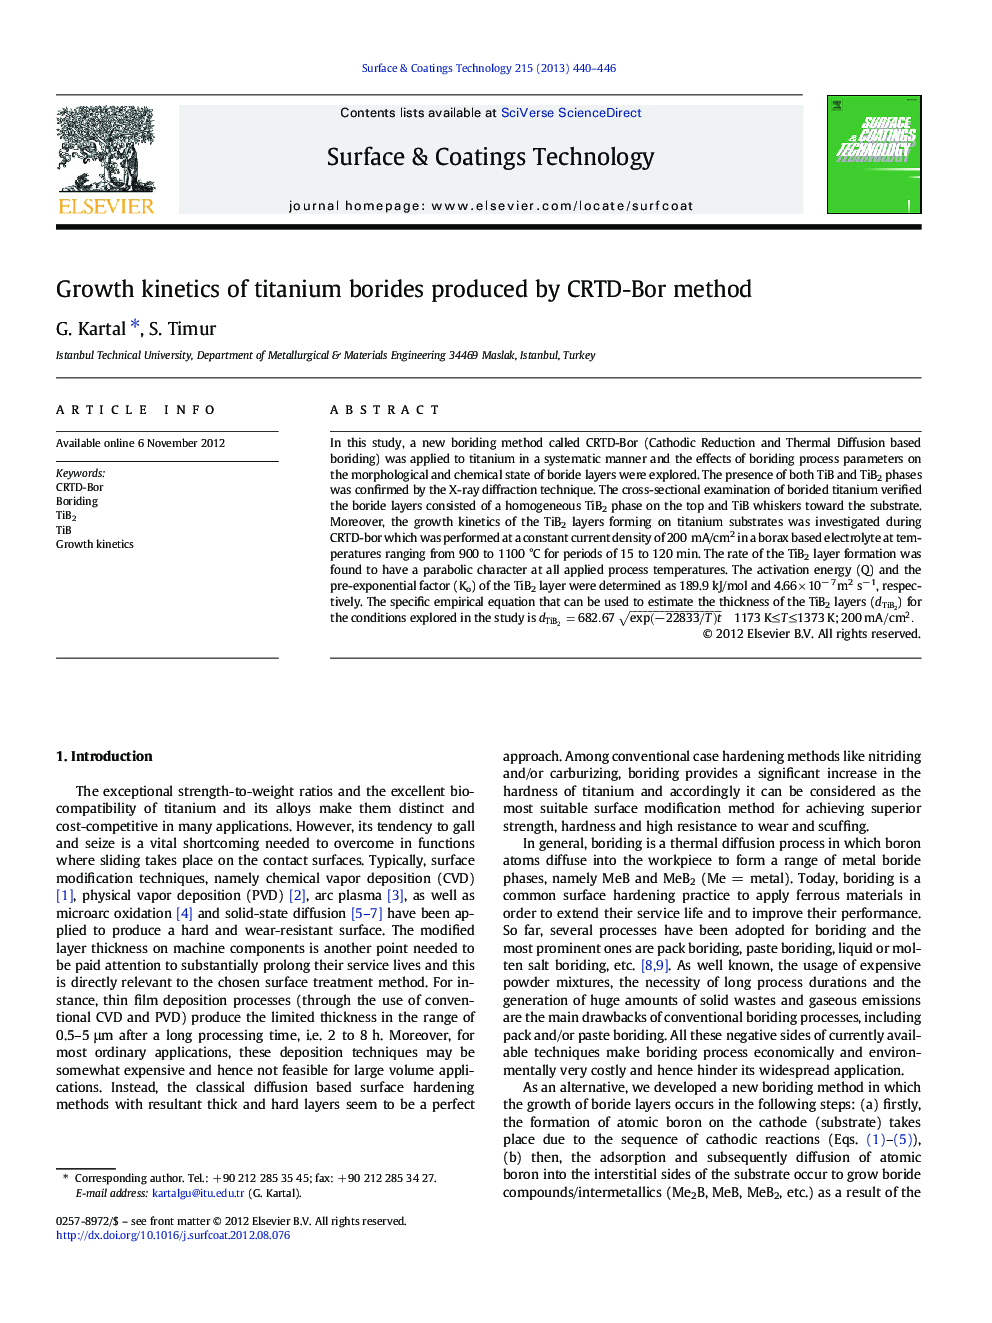 Growth kinetics of titanium borides produced by CRTD-Bor method